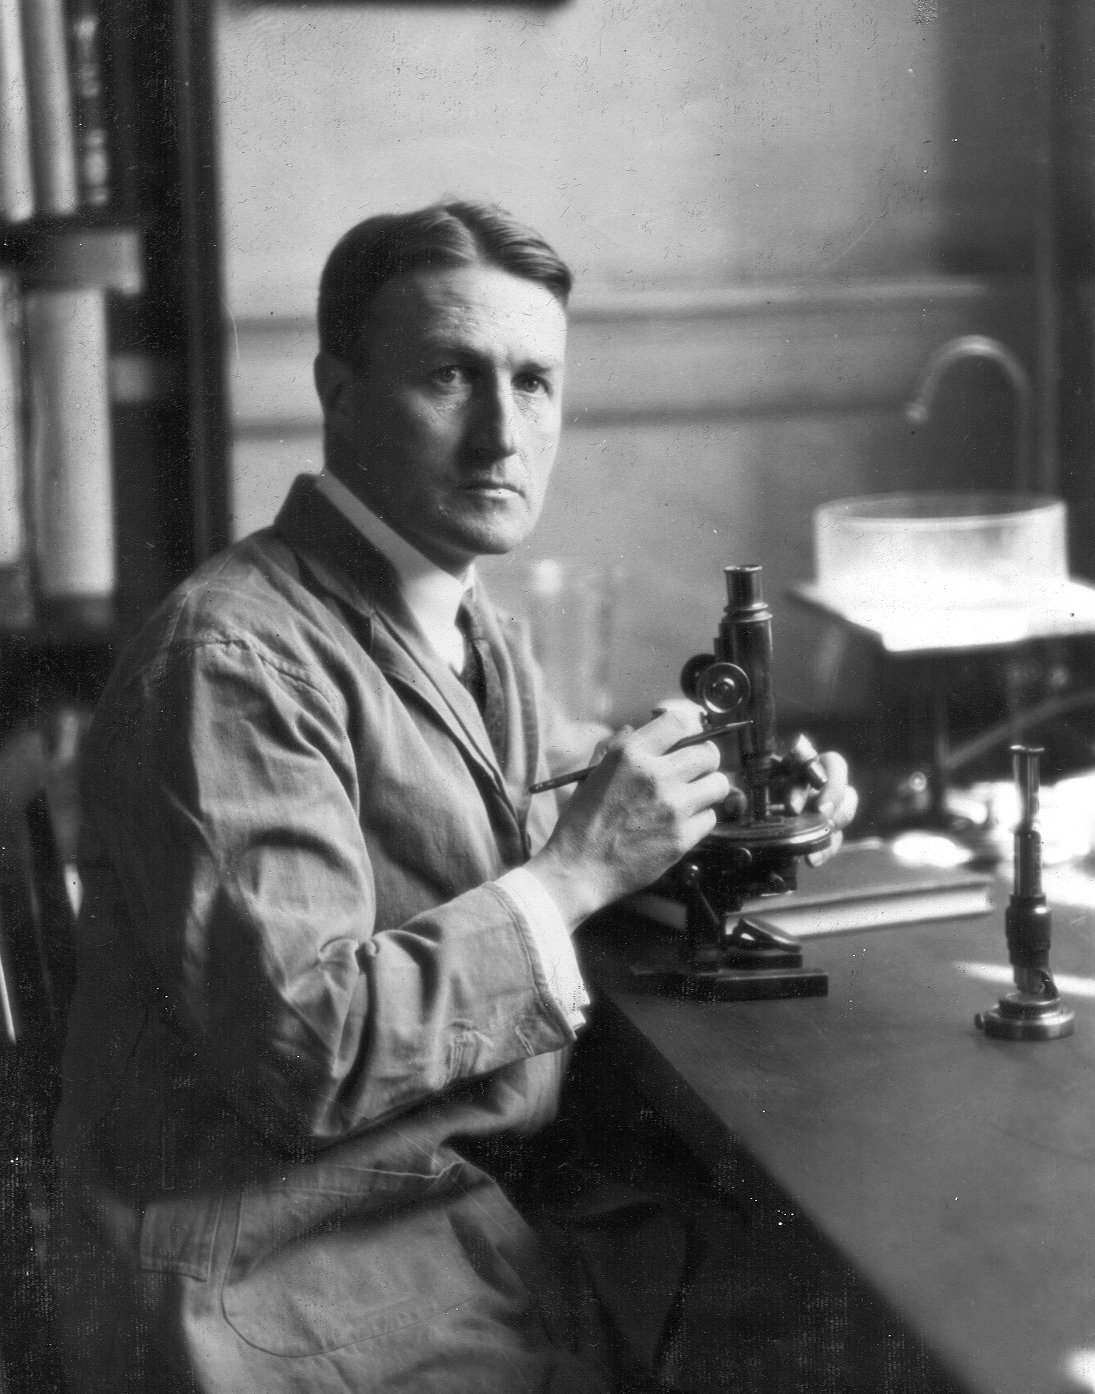 Edward Bell Krumbhaar (1882-1966), with microscope, portrait photograph